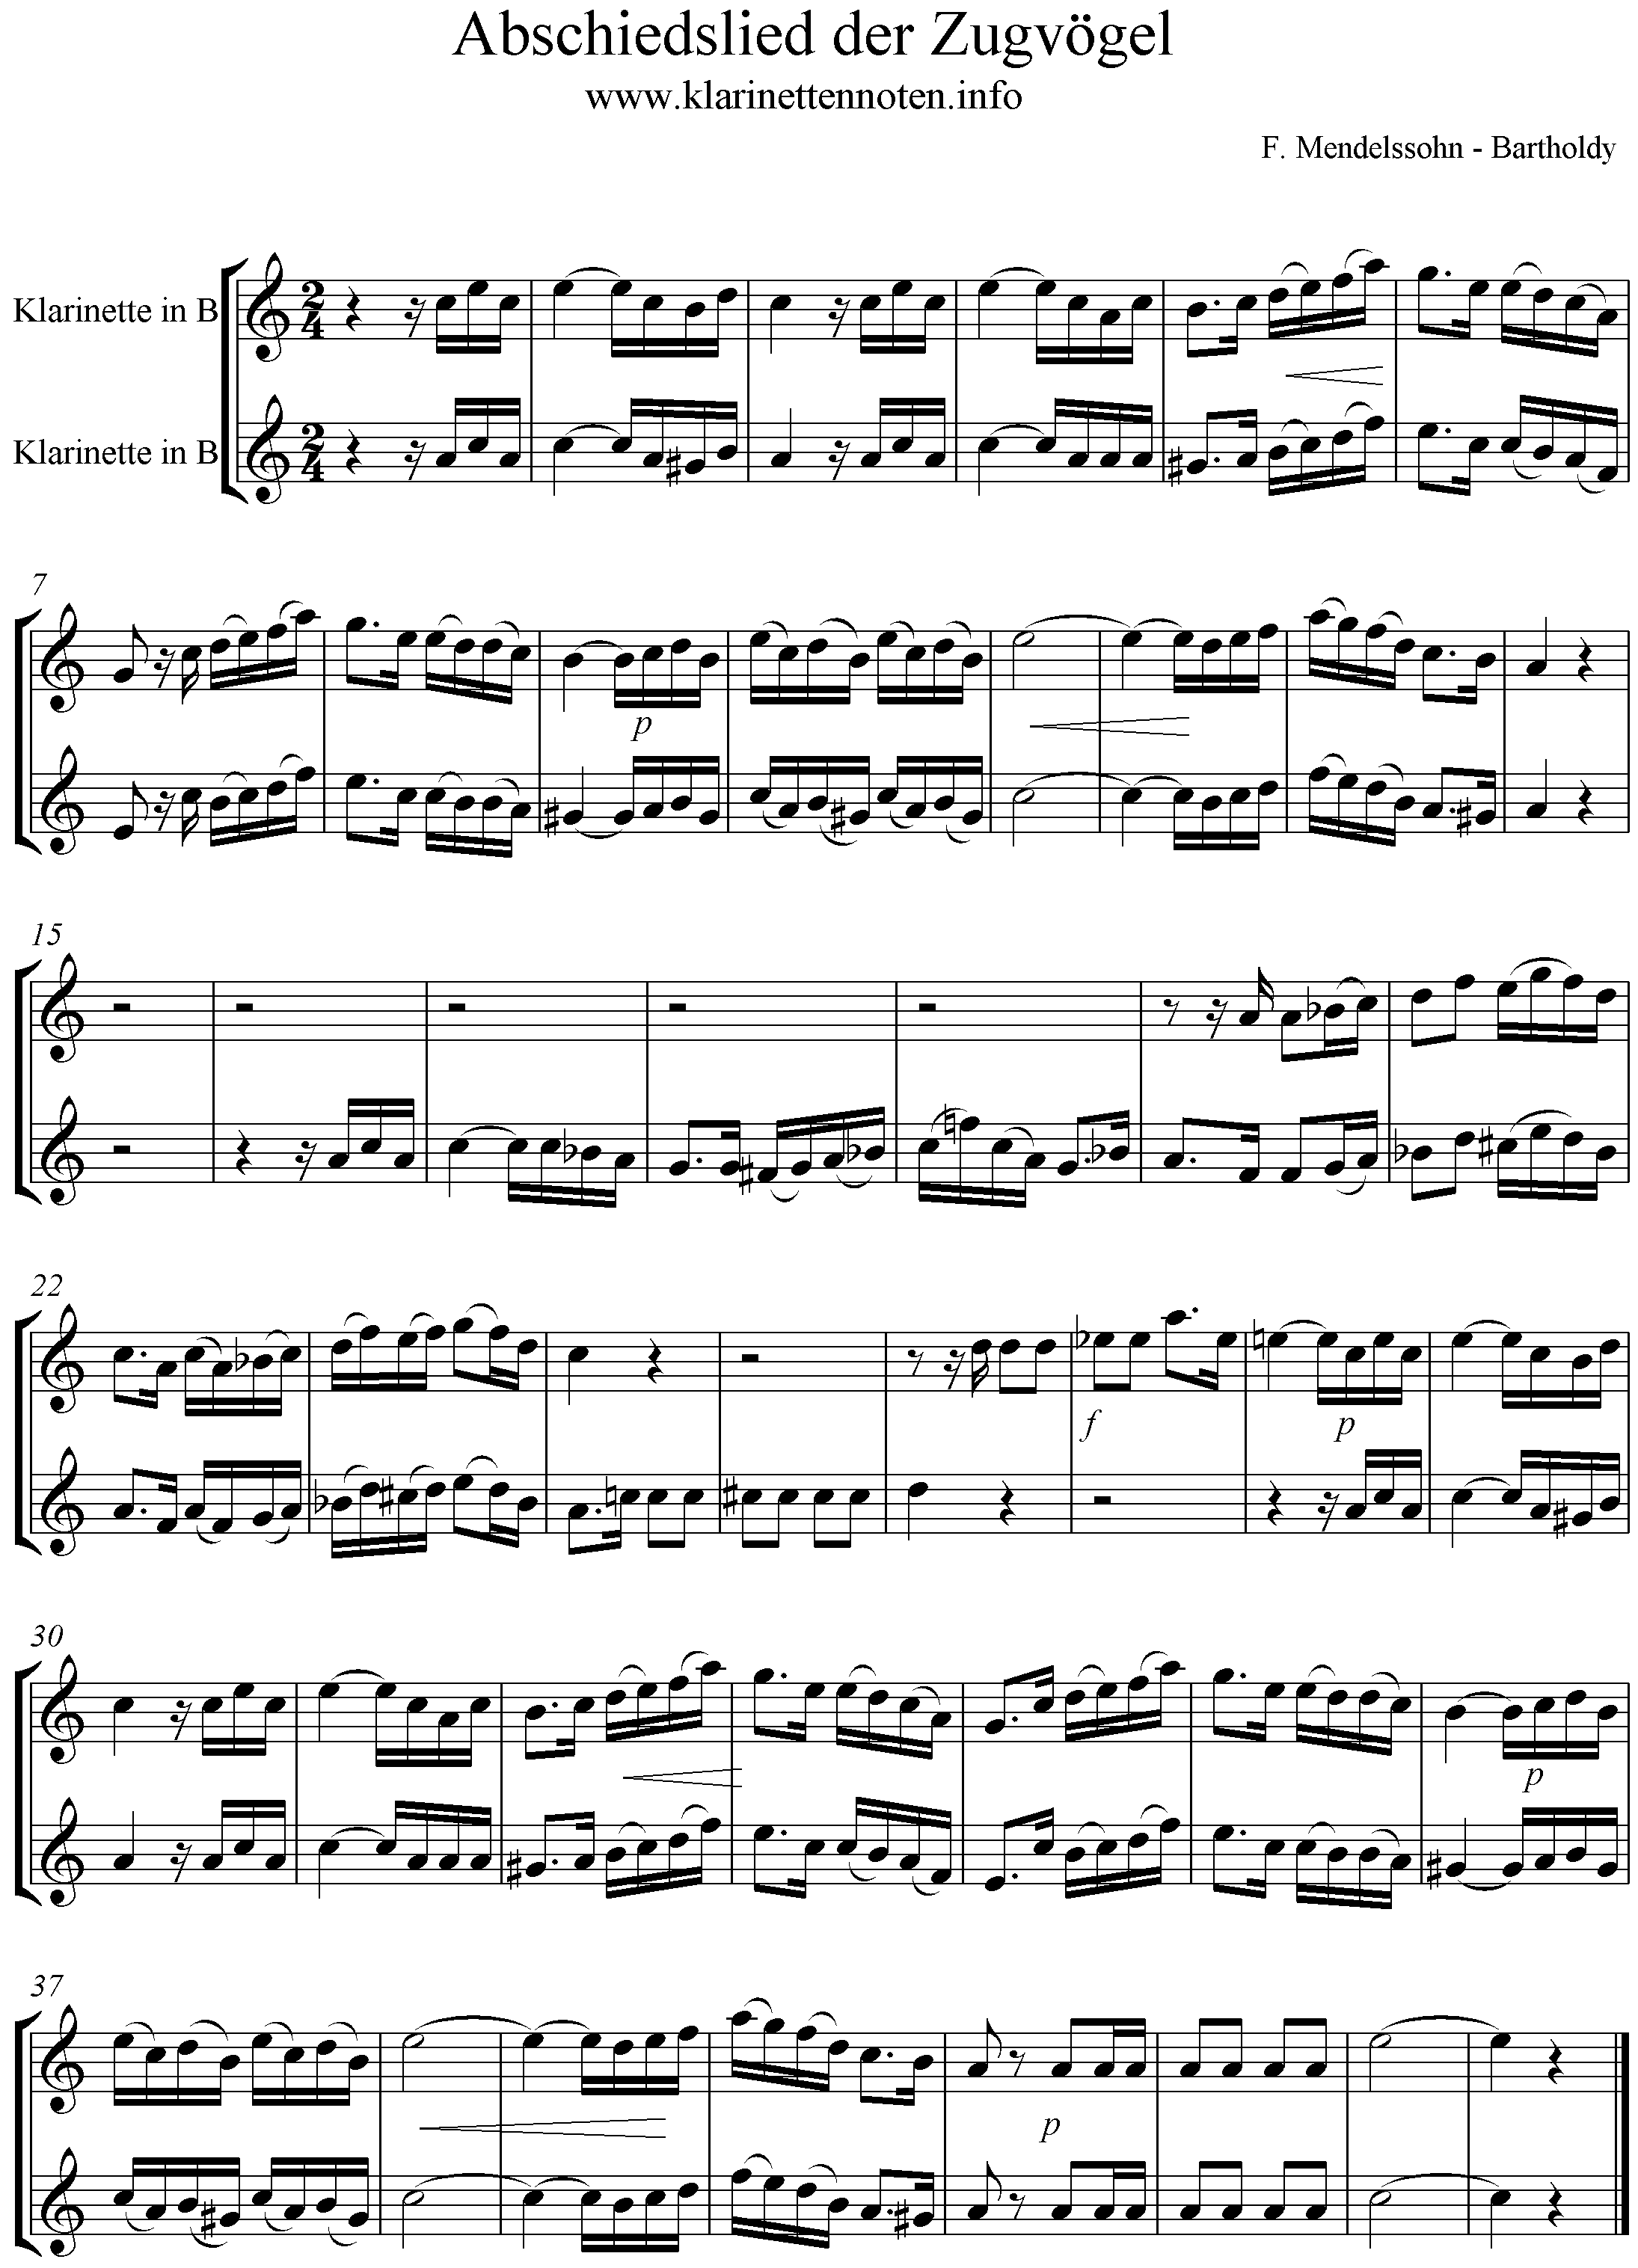 NOten Abschiedslied der Zugcögel, C-Dur, op. 63, Mendelssohn-Bartholdy